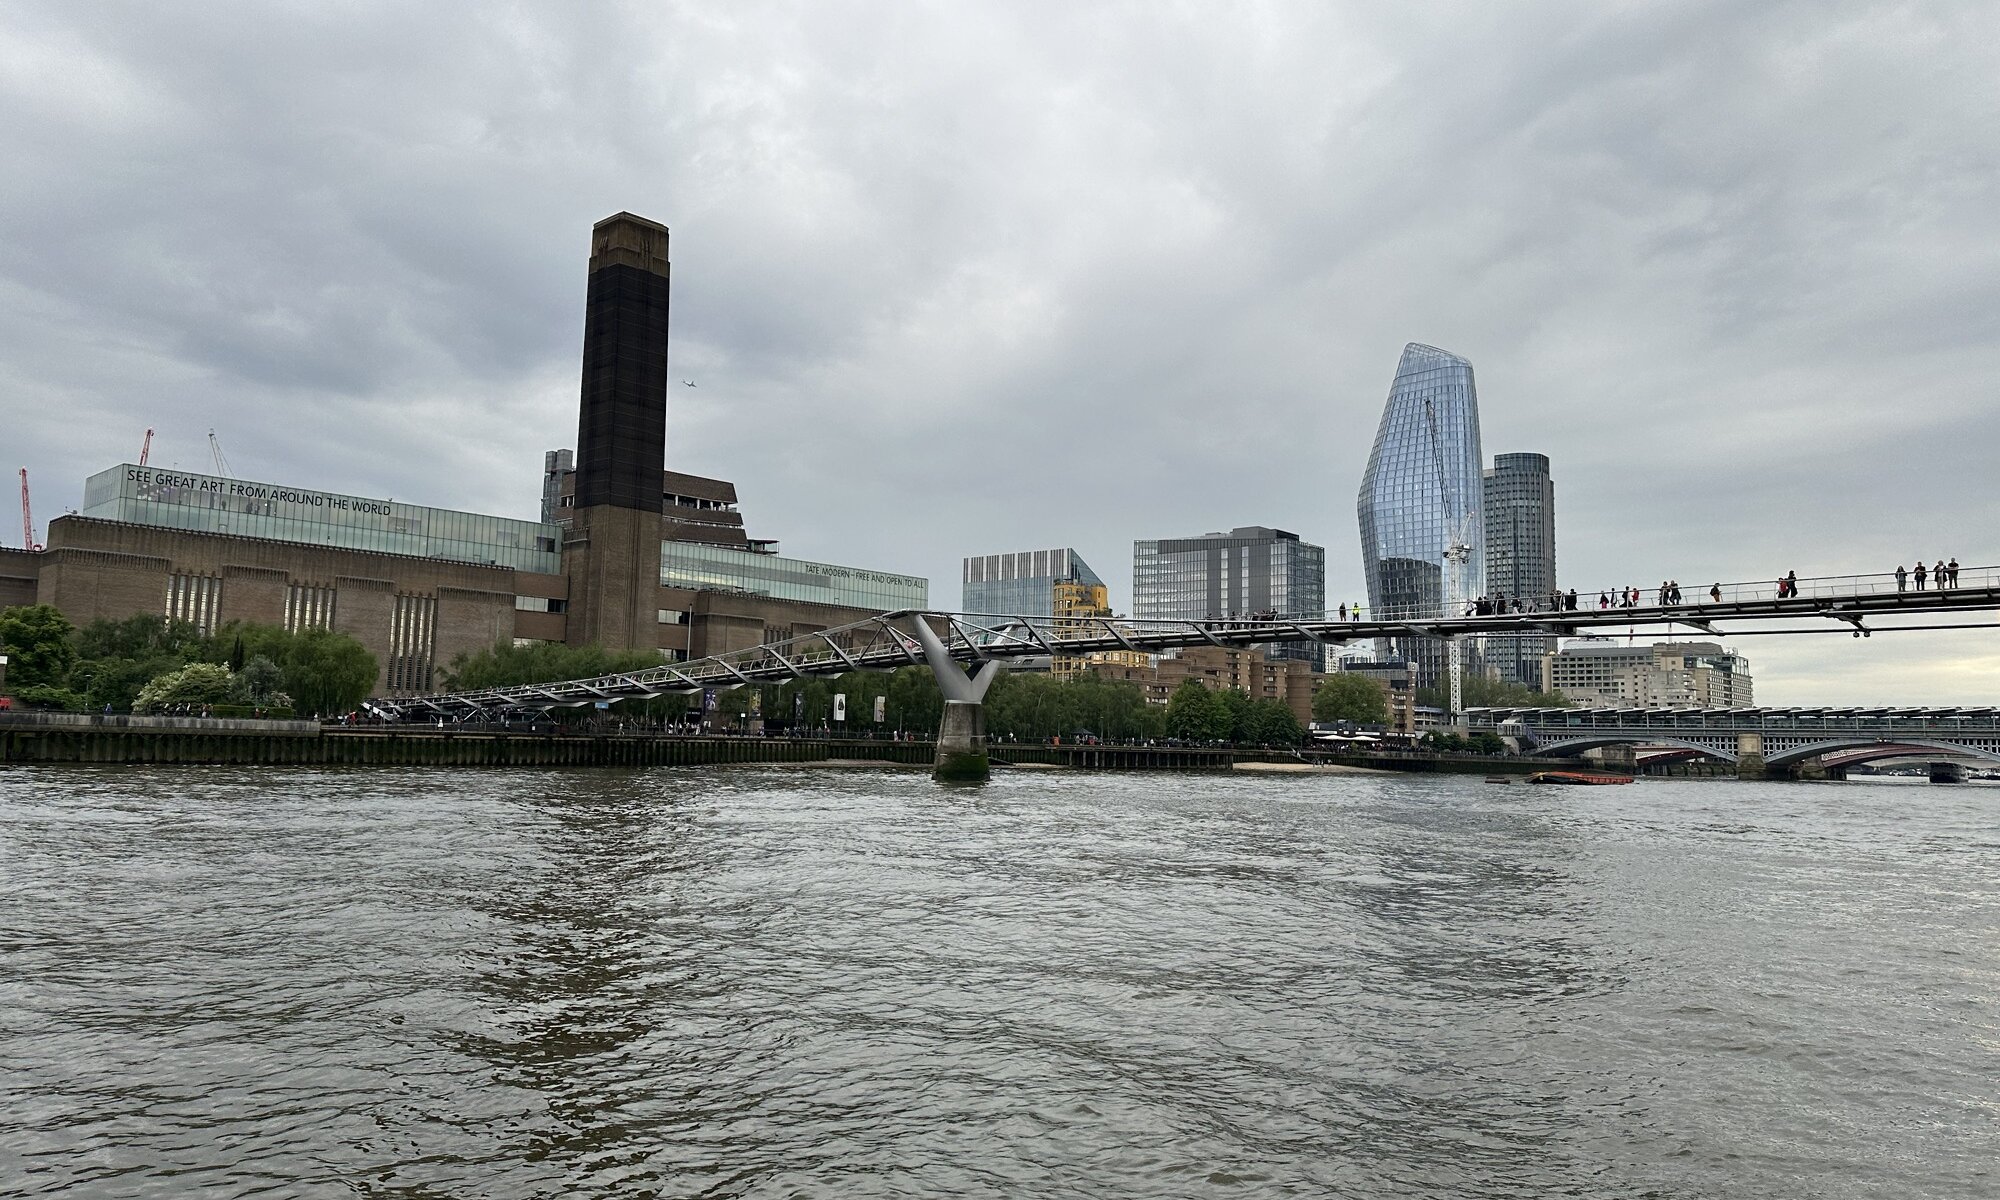 Millenium bridge seen from ferry boat, London